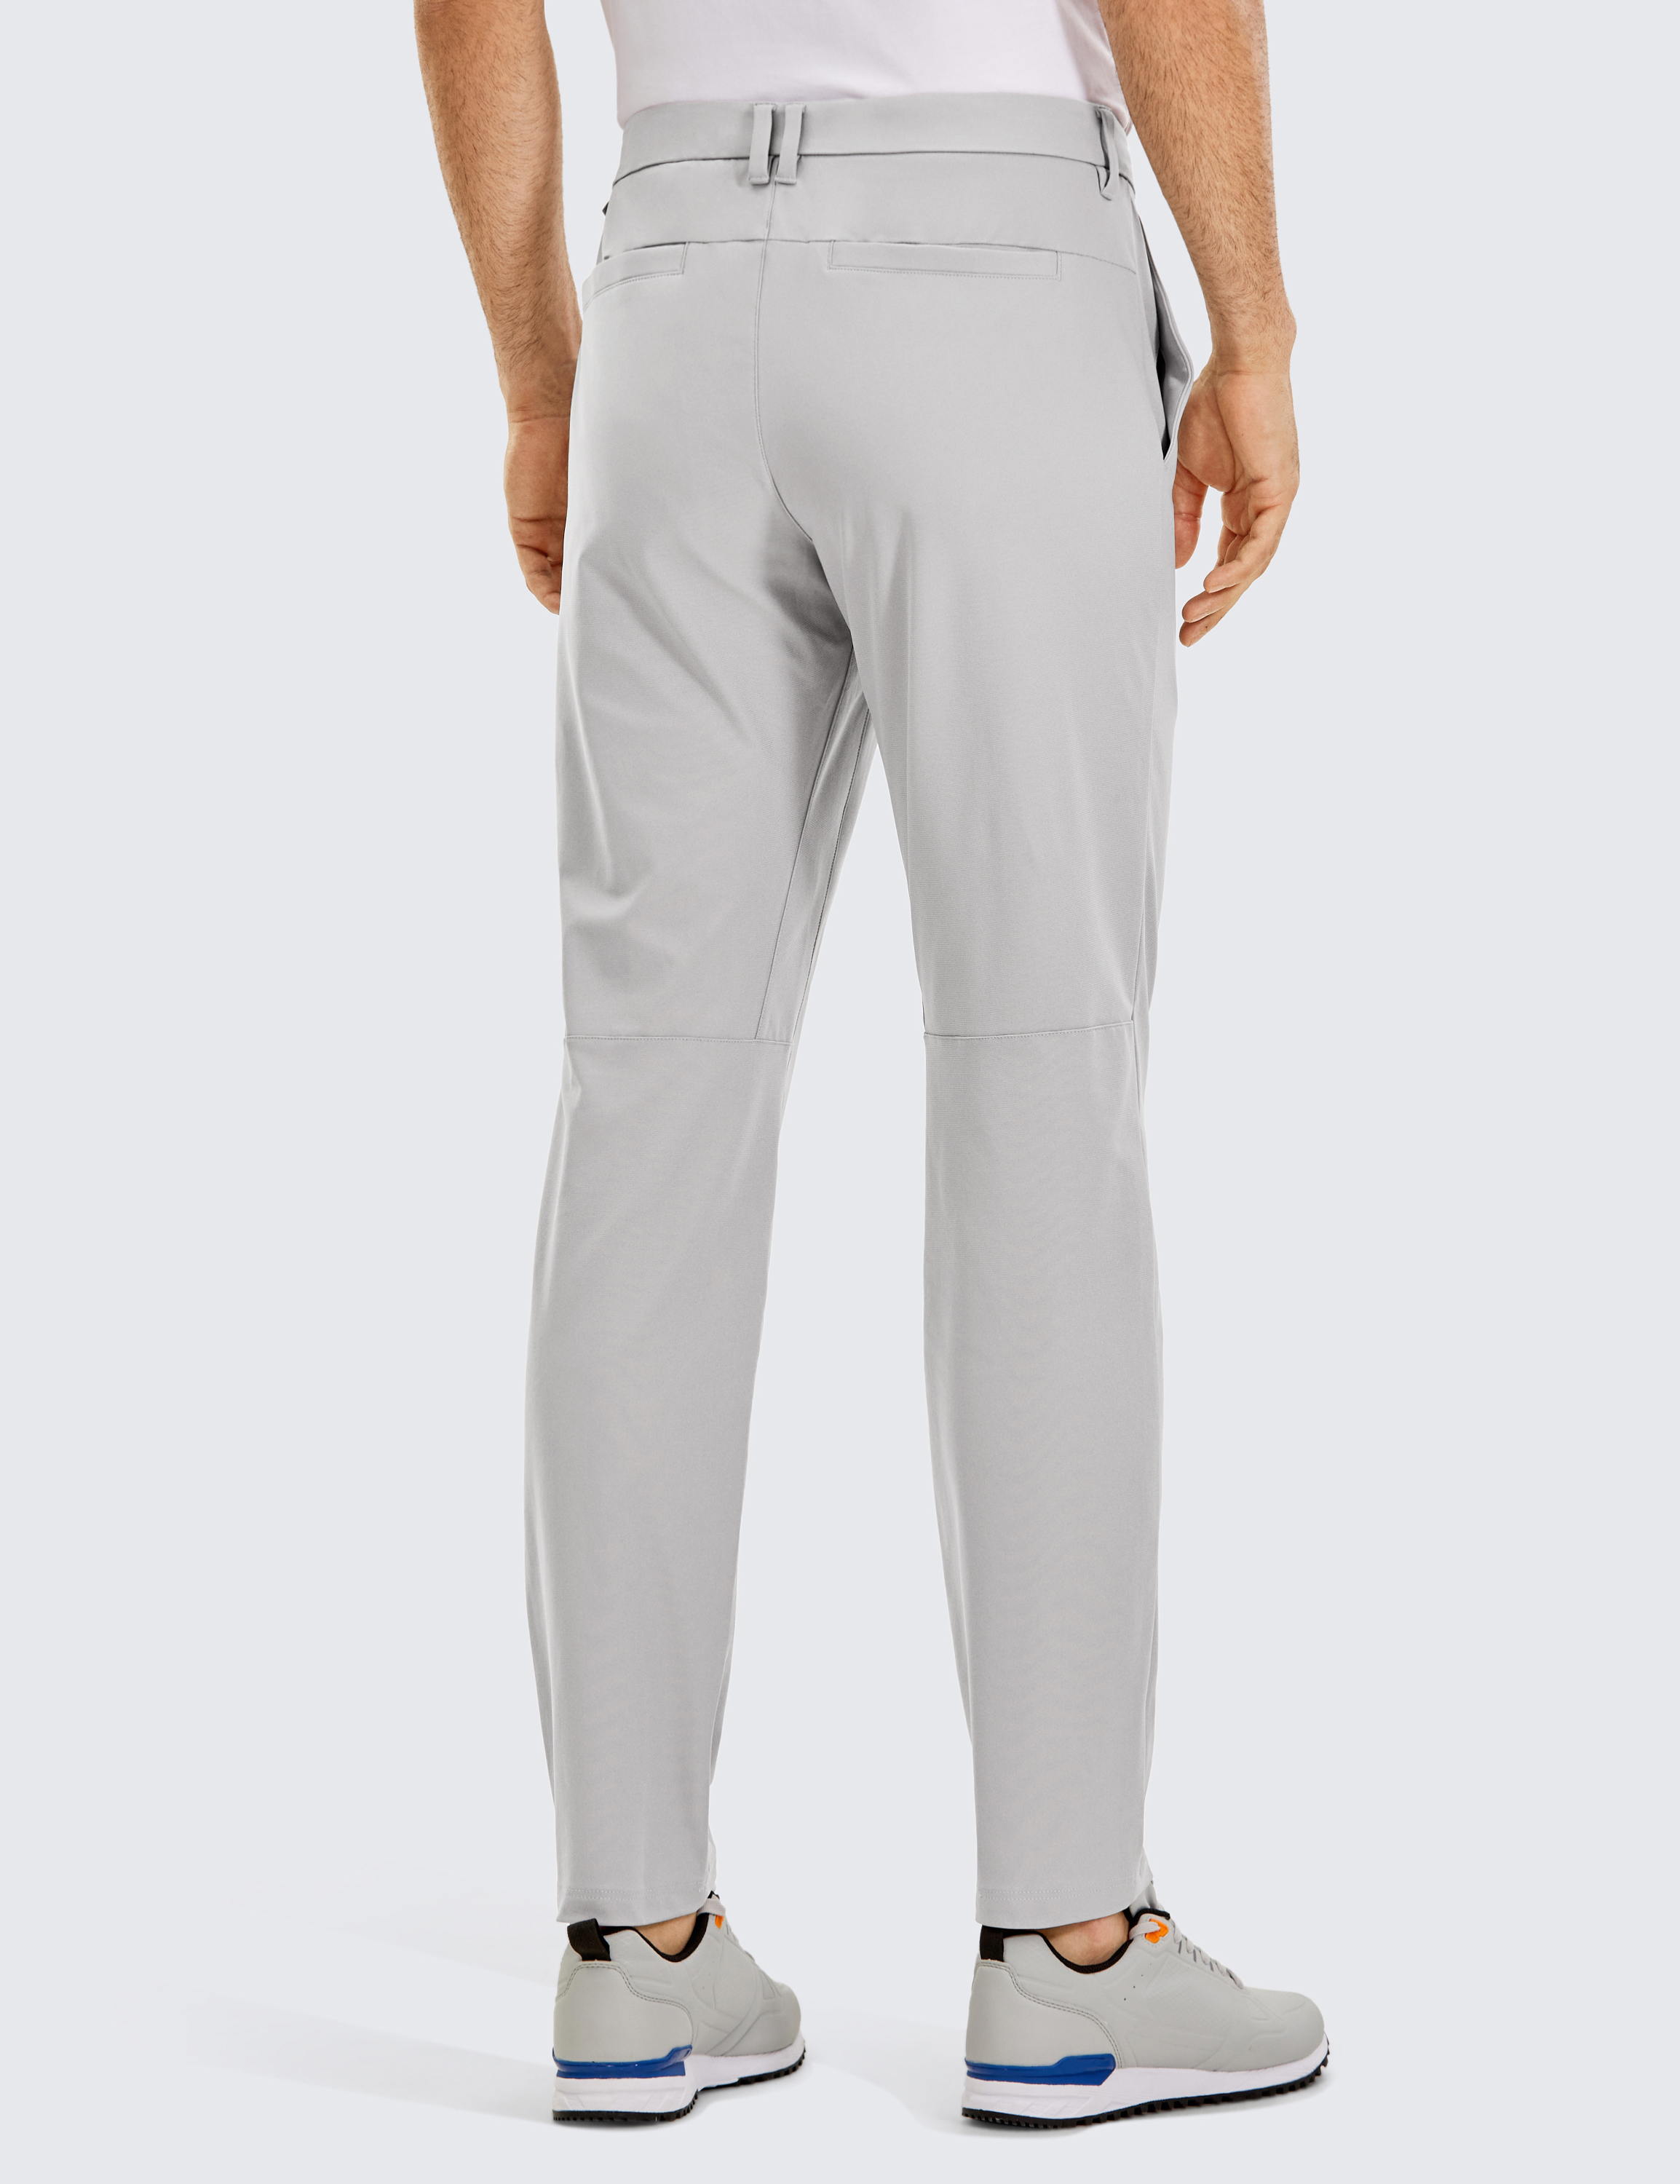 CRZ YOGA Men's Stretch Golf Pants 35'' Slim Fit Work Pants Stretch